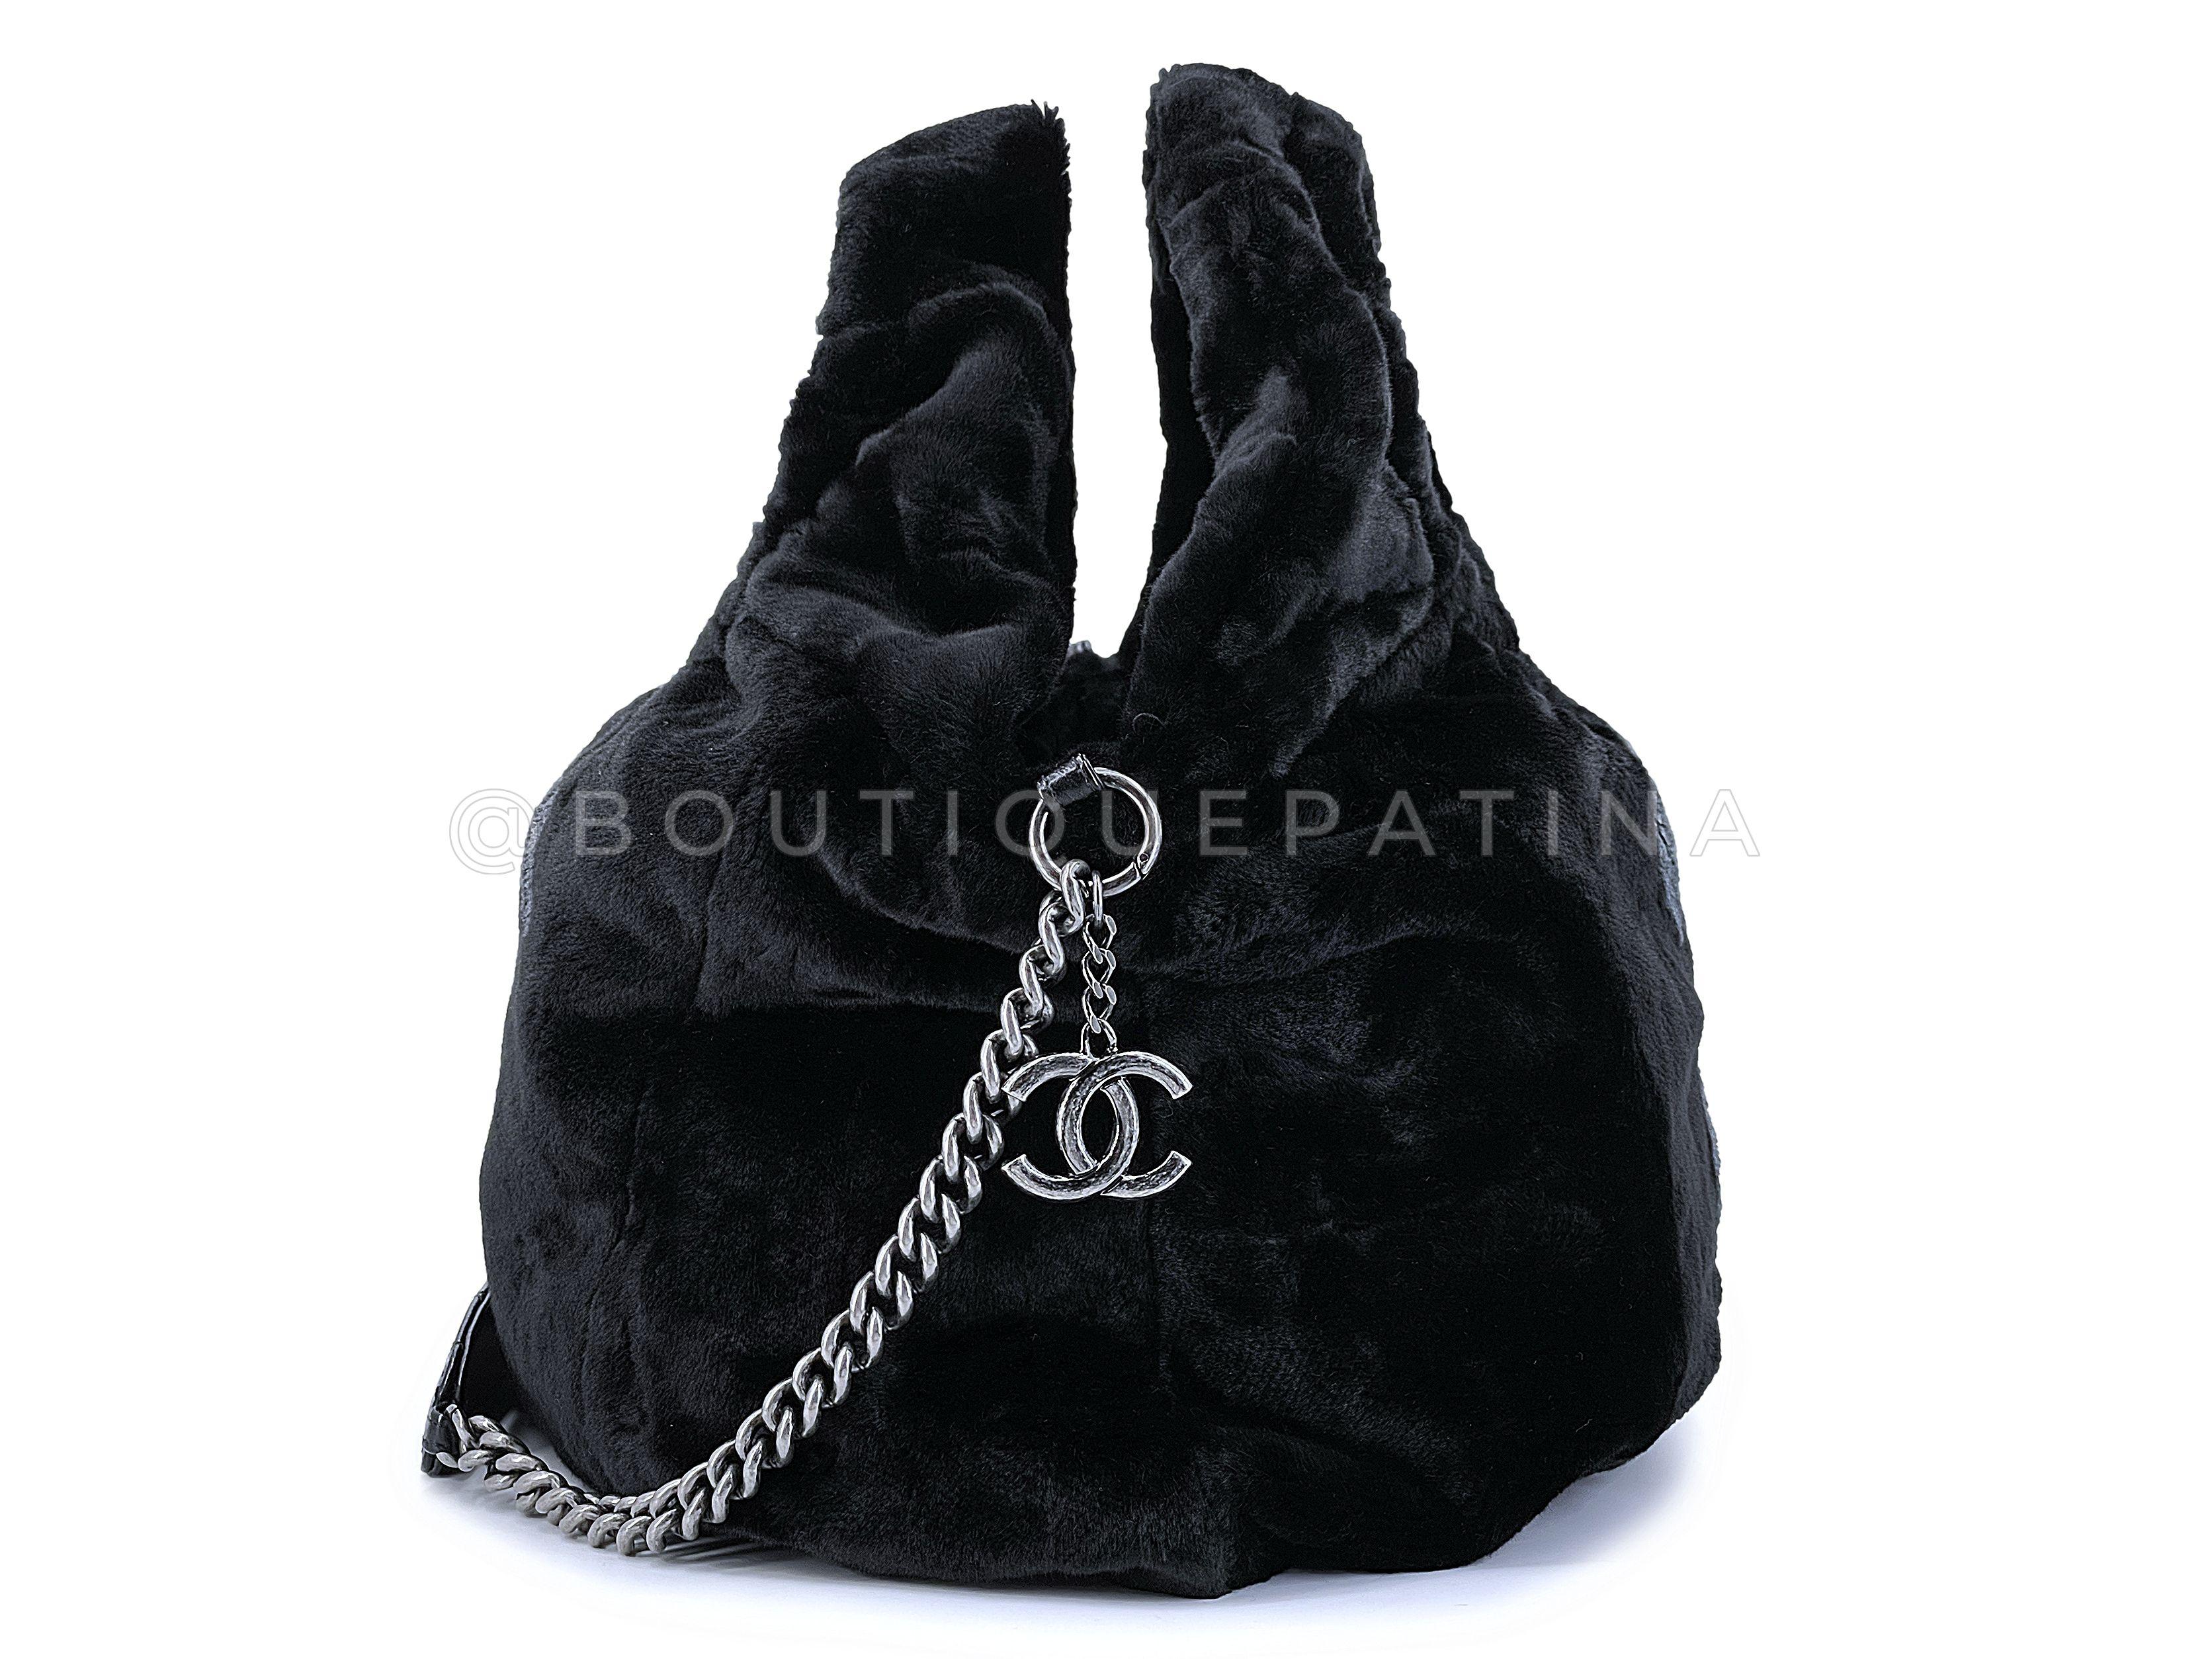 Rare Chanel 2010 Black Logo Fur Hobo Tote Bag SHW 67704 In Excellent Condition For Sale In Costa Mesa, CA